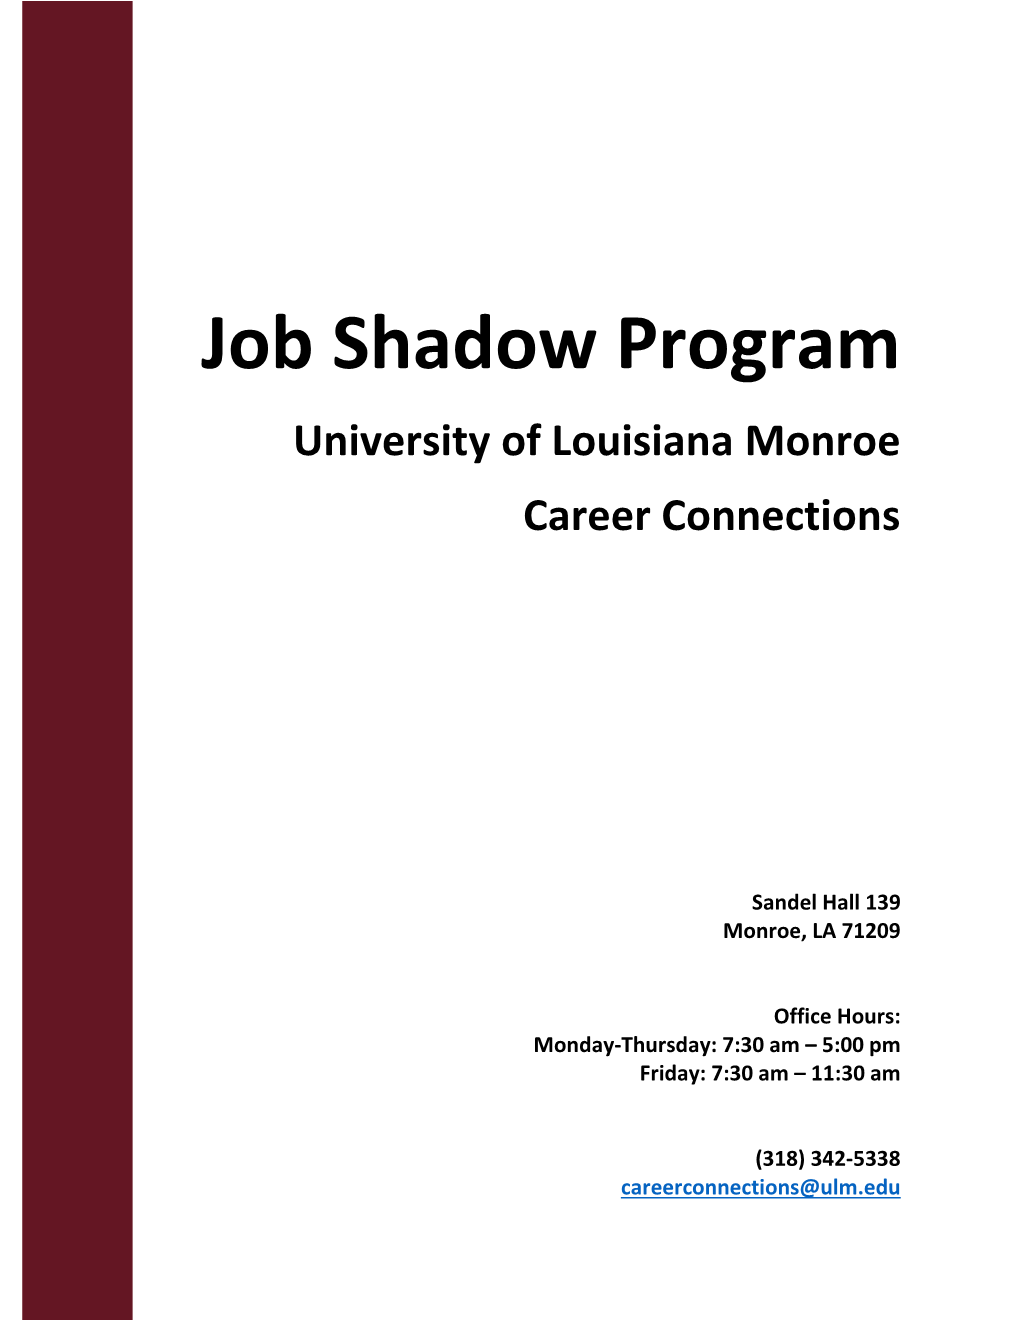 Job Shadow Program University of Louisiana Monroe Career Connections